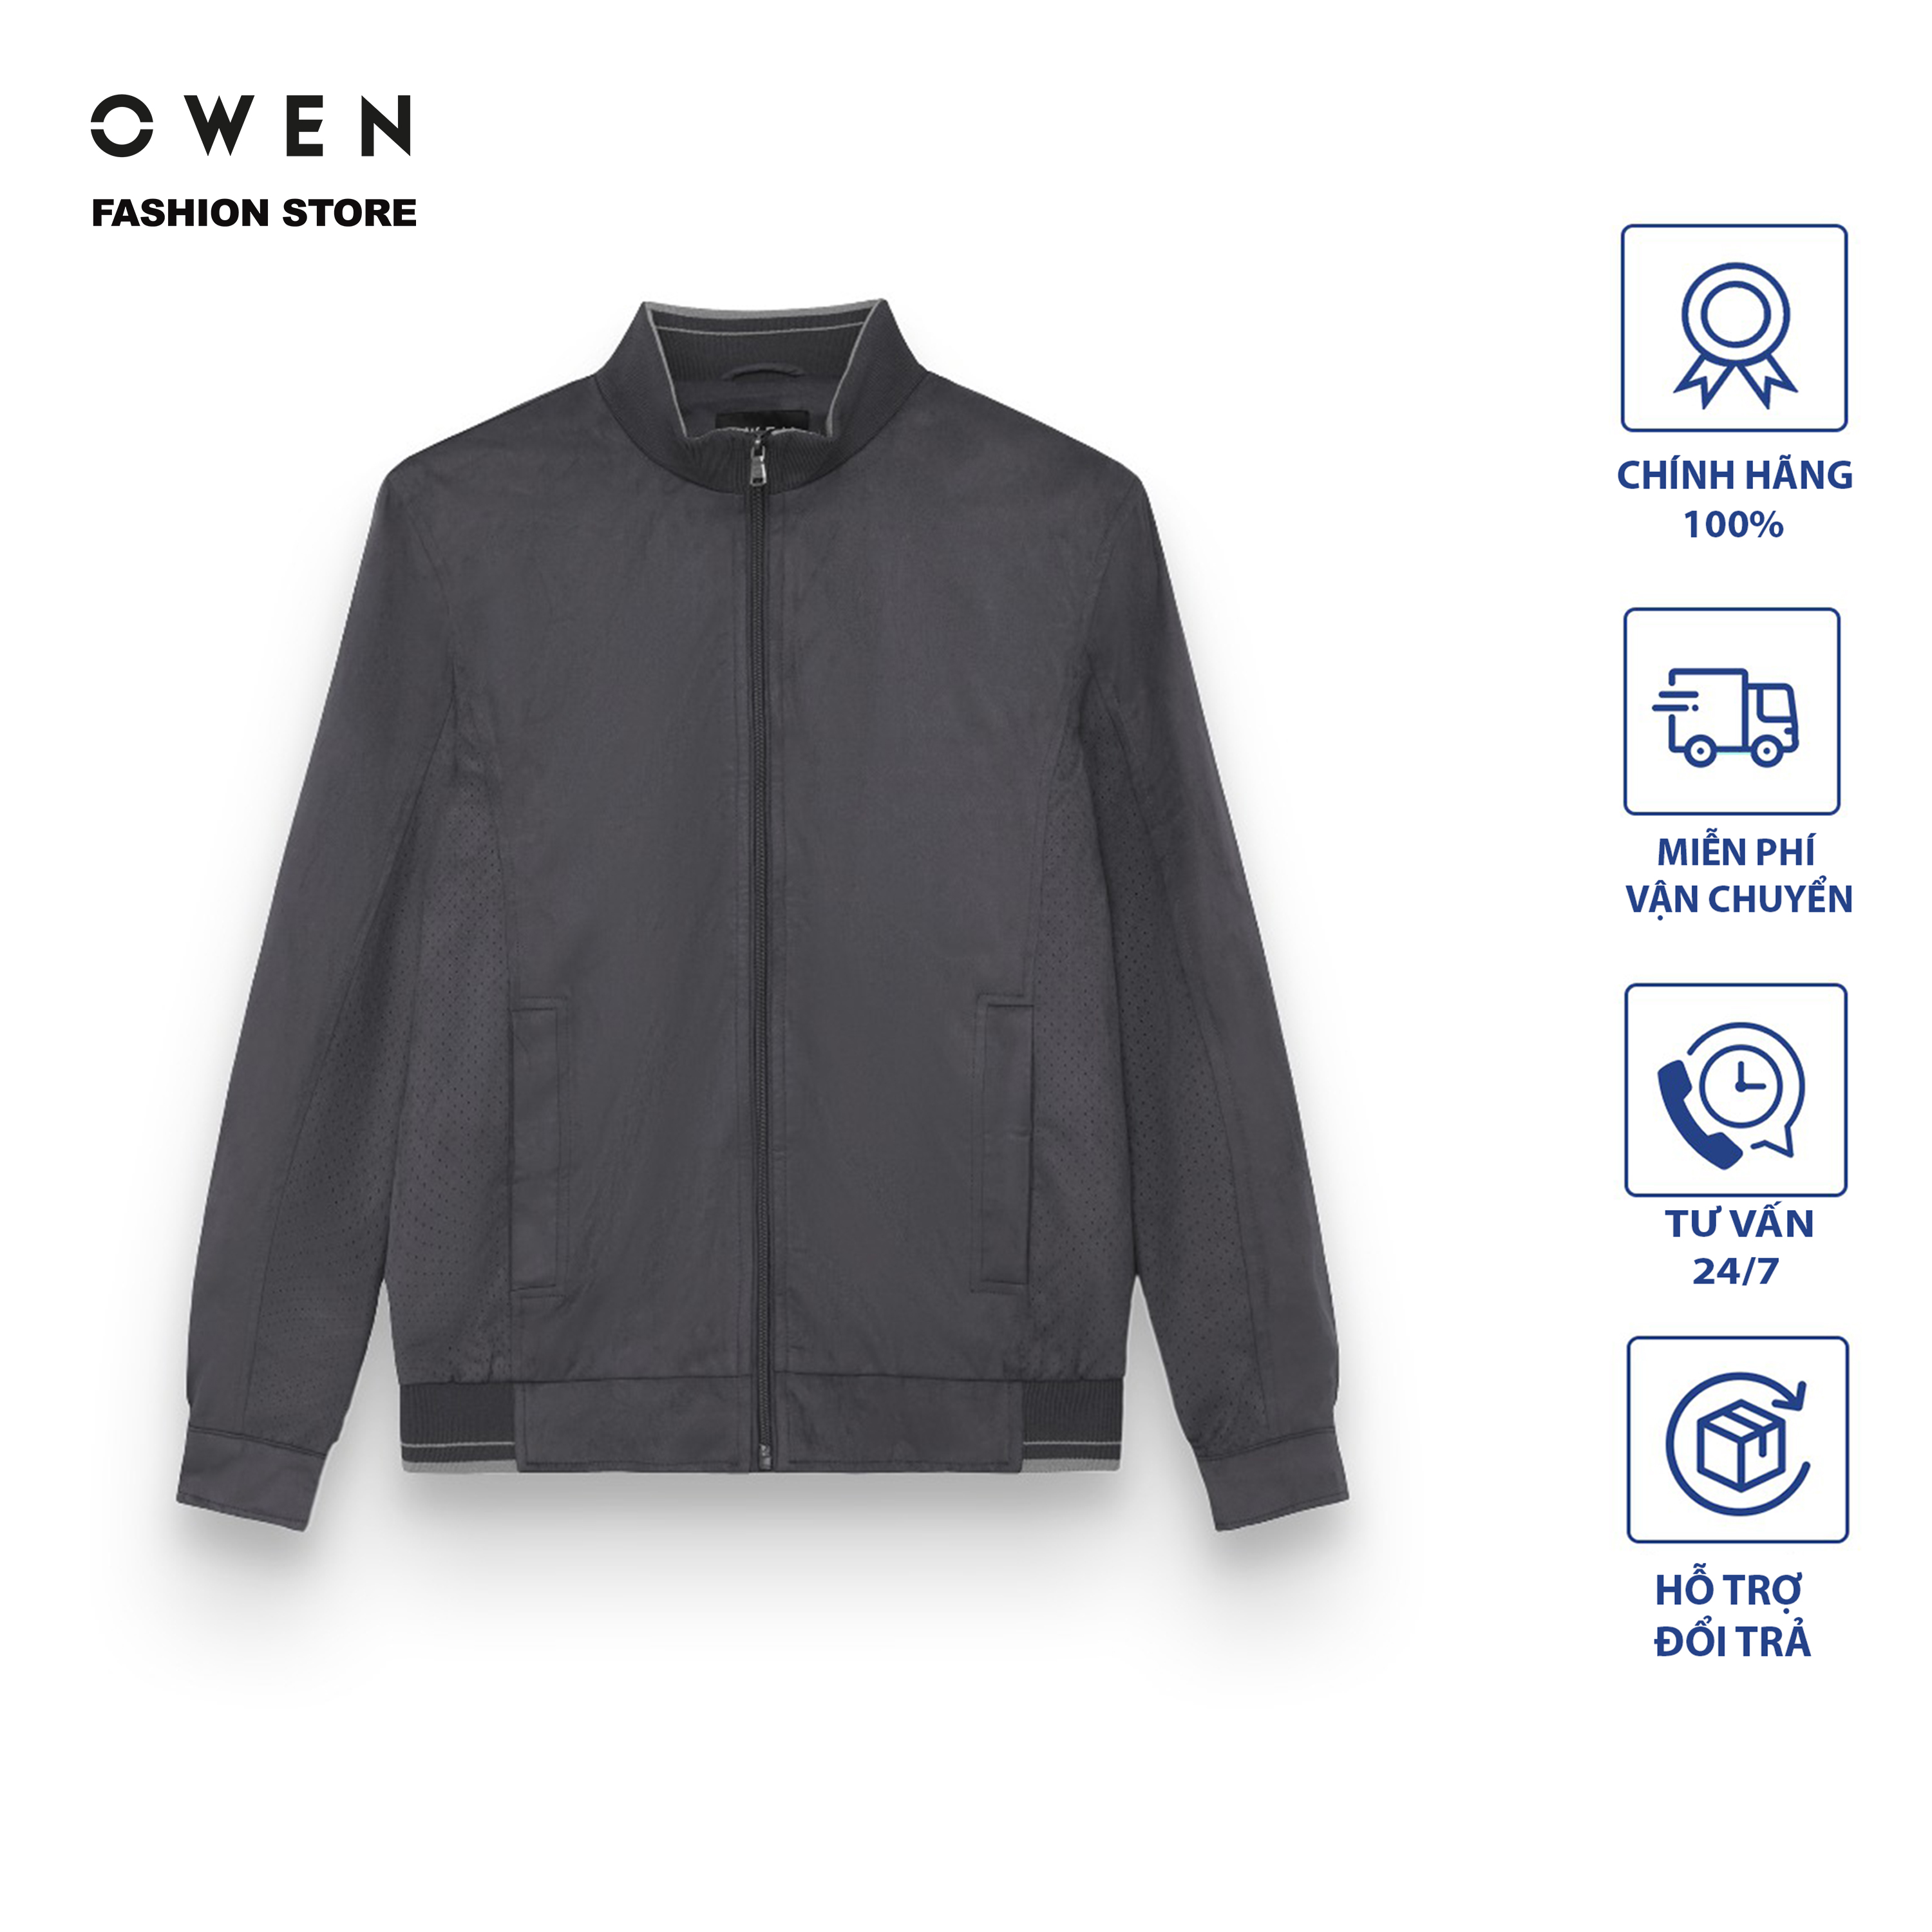 OWEN - (FREESHIP) Áo khoác nam, áo gió Jacket cao cấp giữ ấm tốt JK220714